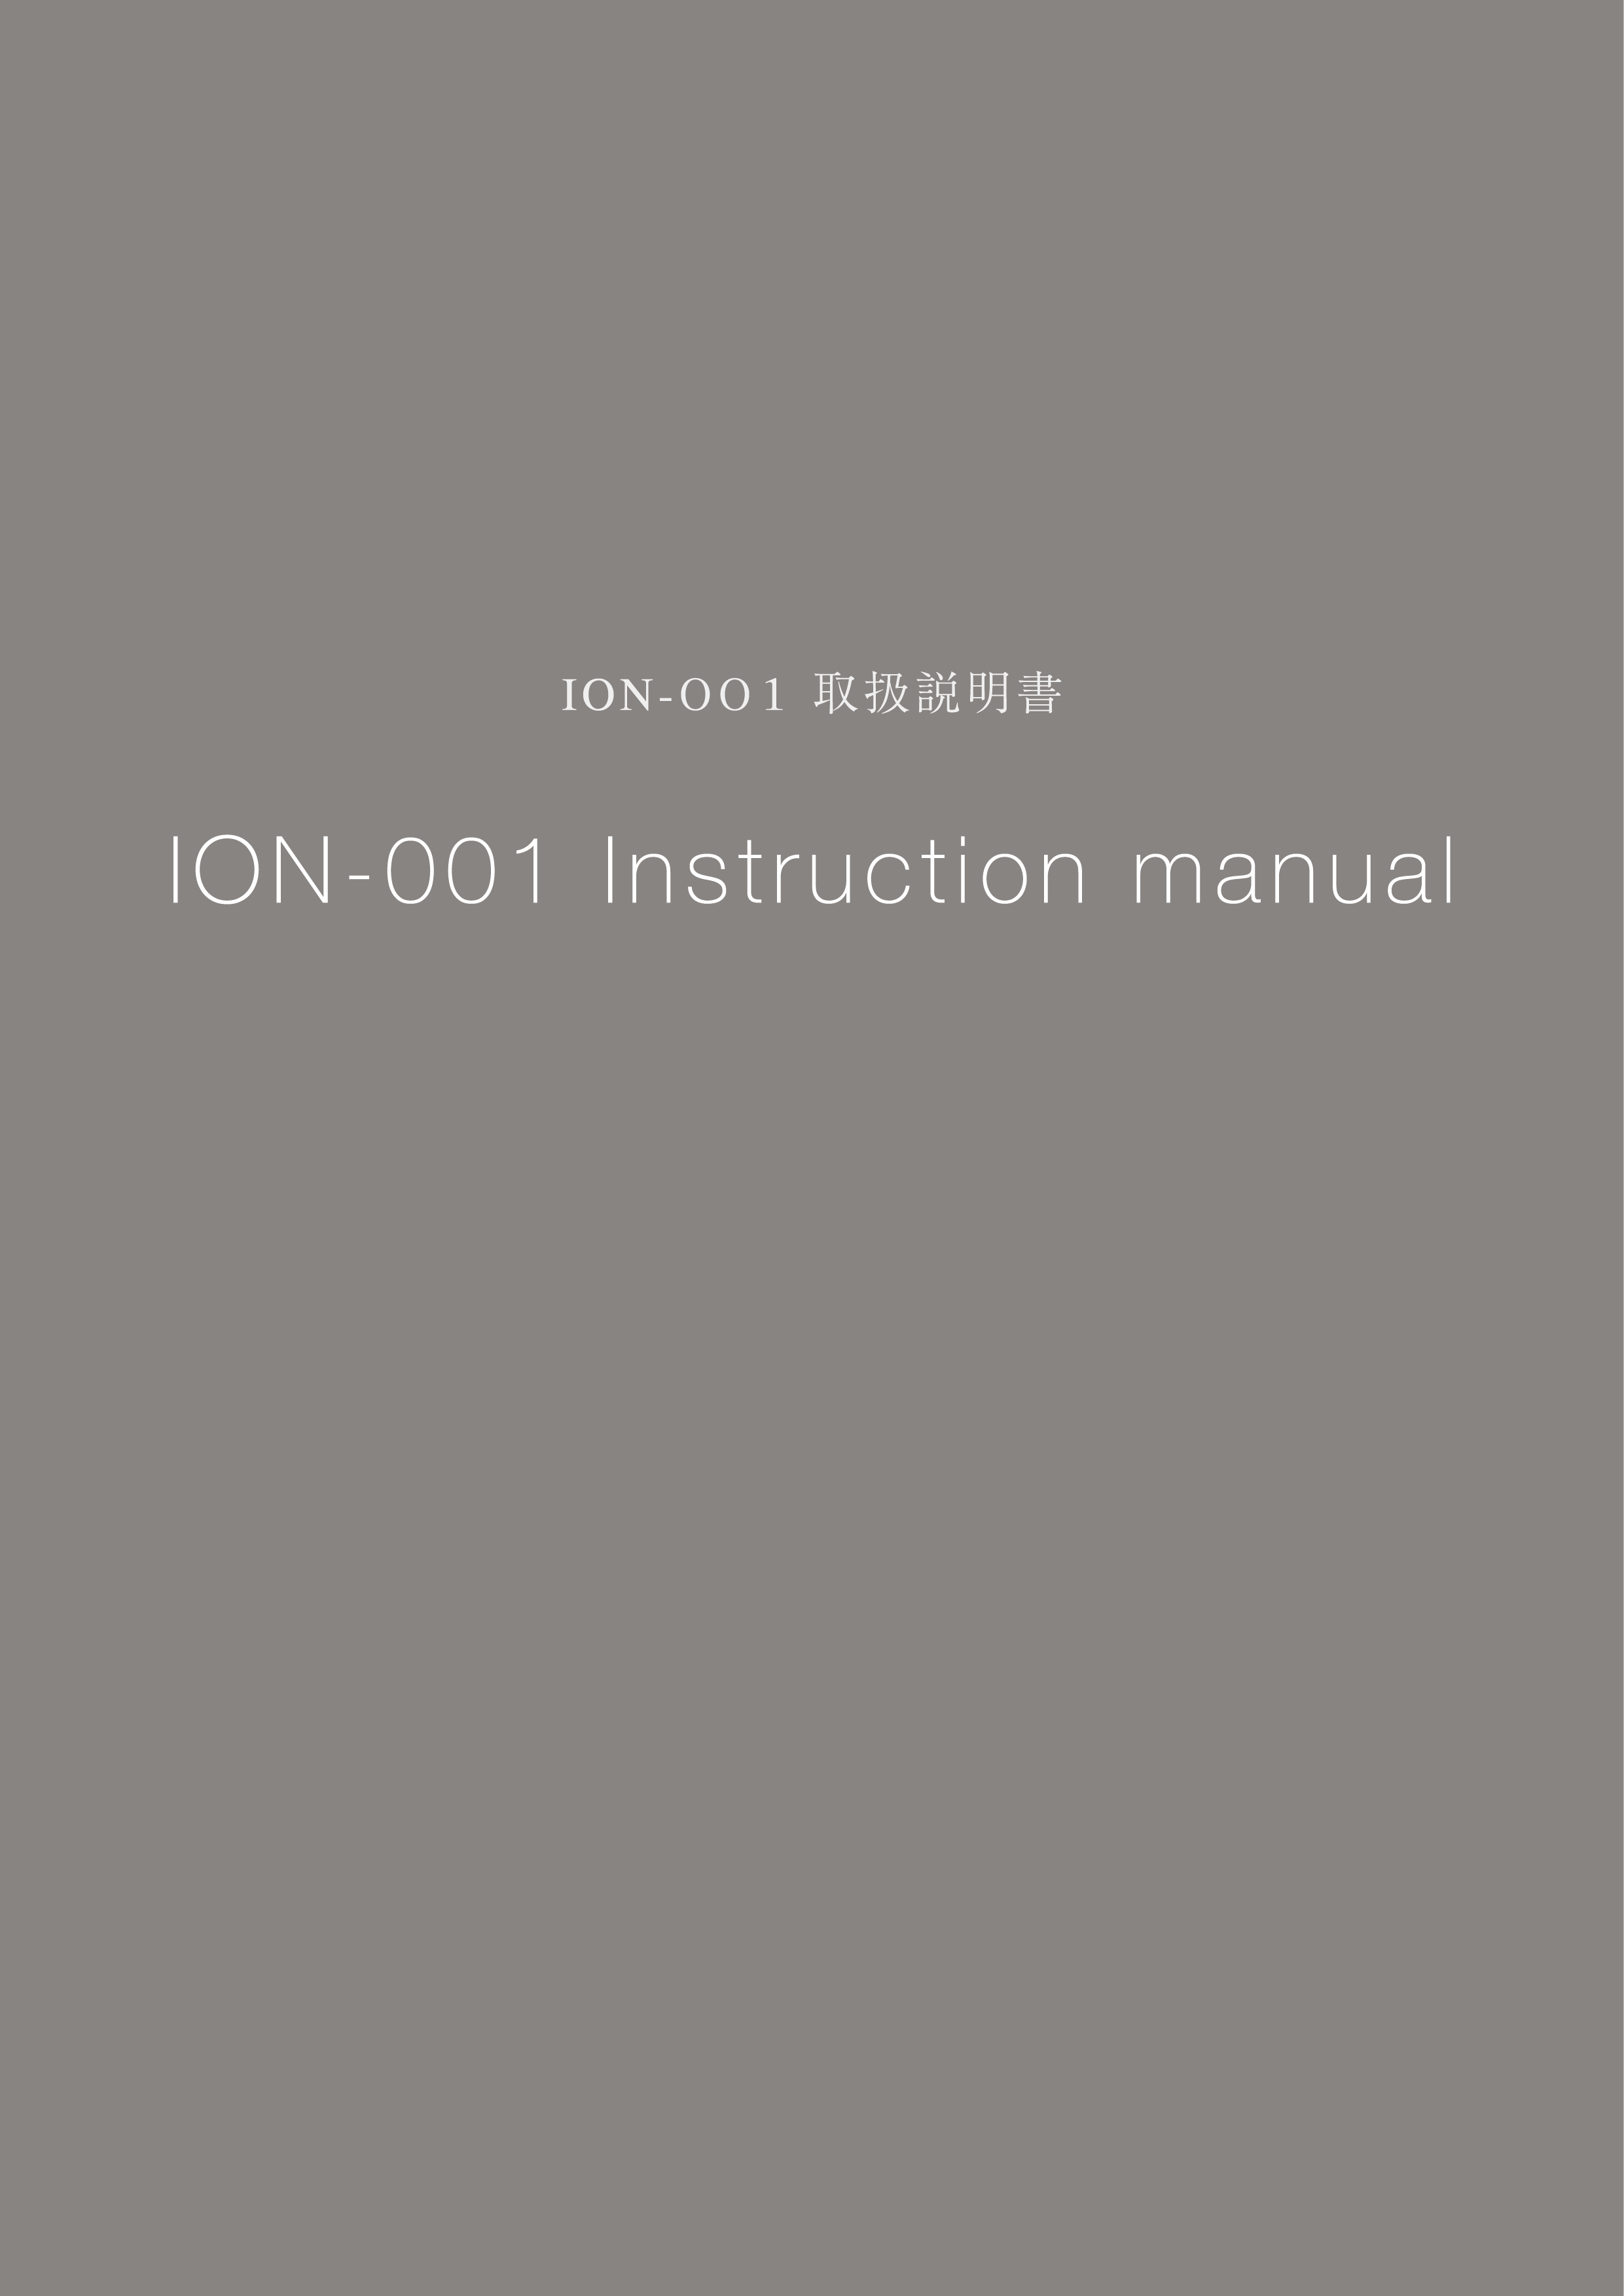 ION-001 Instruction manual